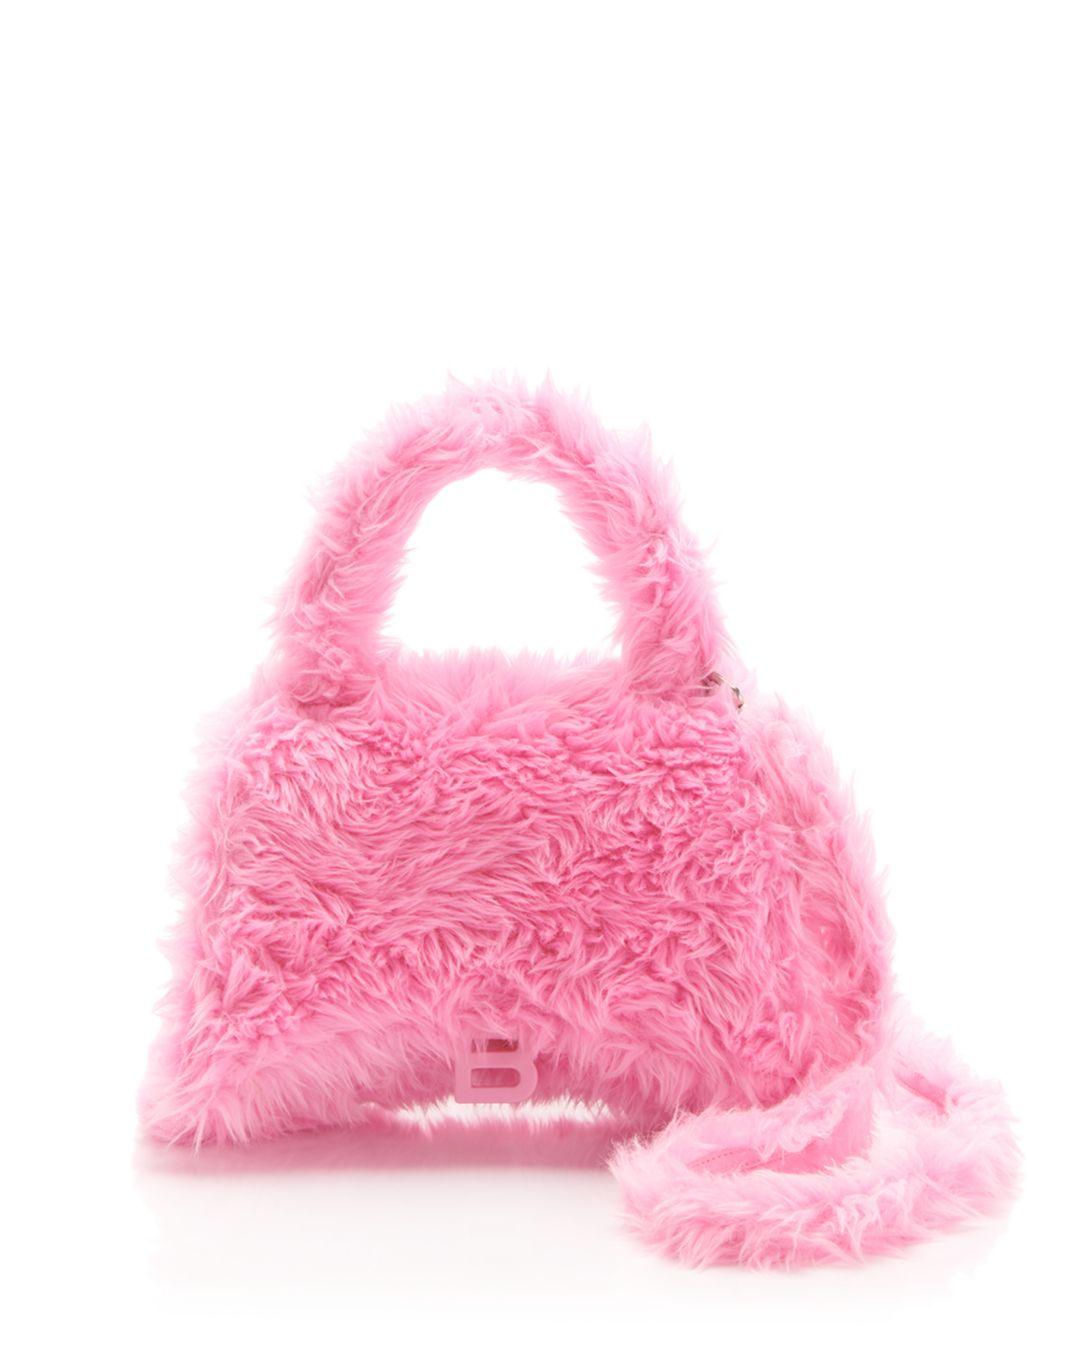 Balenciaga Hourglass Medium Fluffy Top Handle Bag in Pink | Lyst